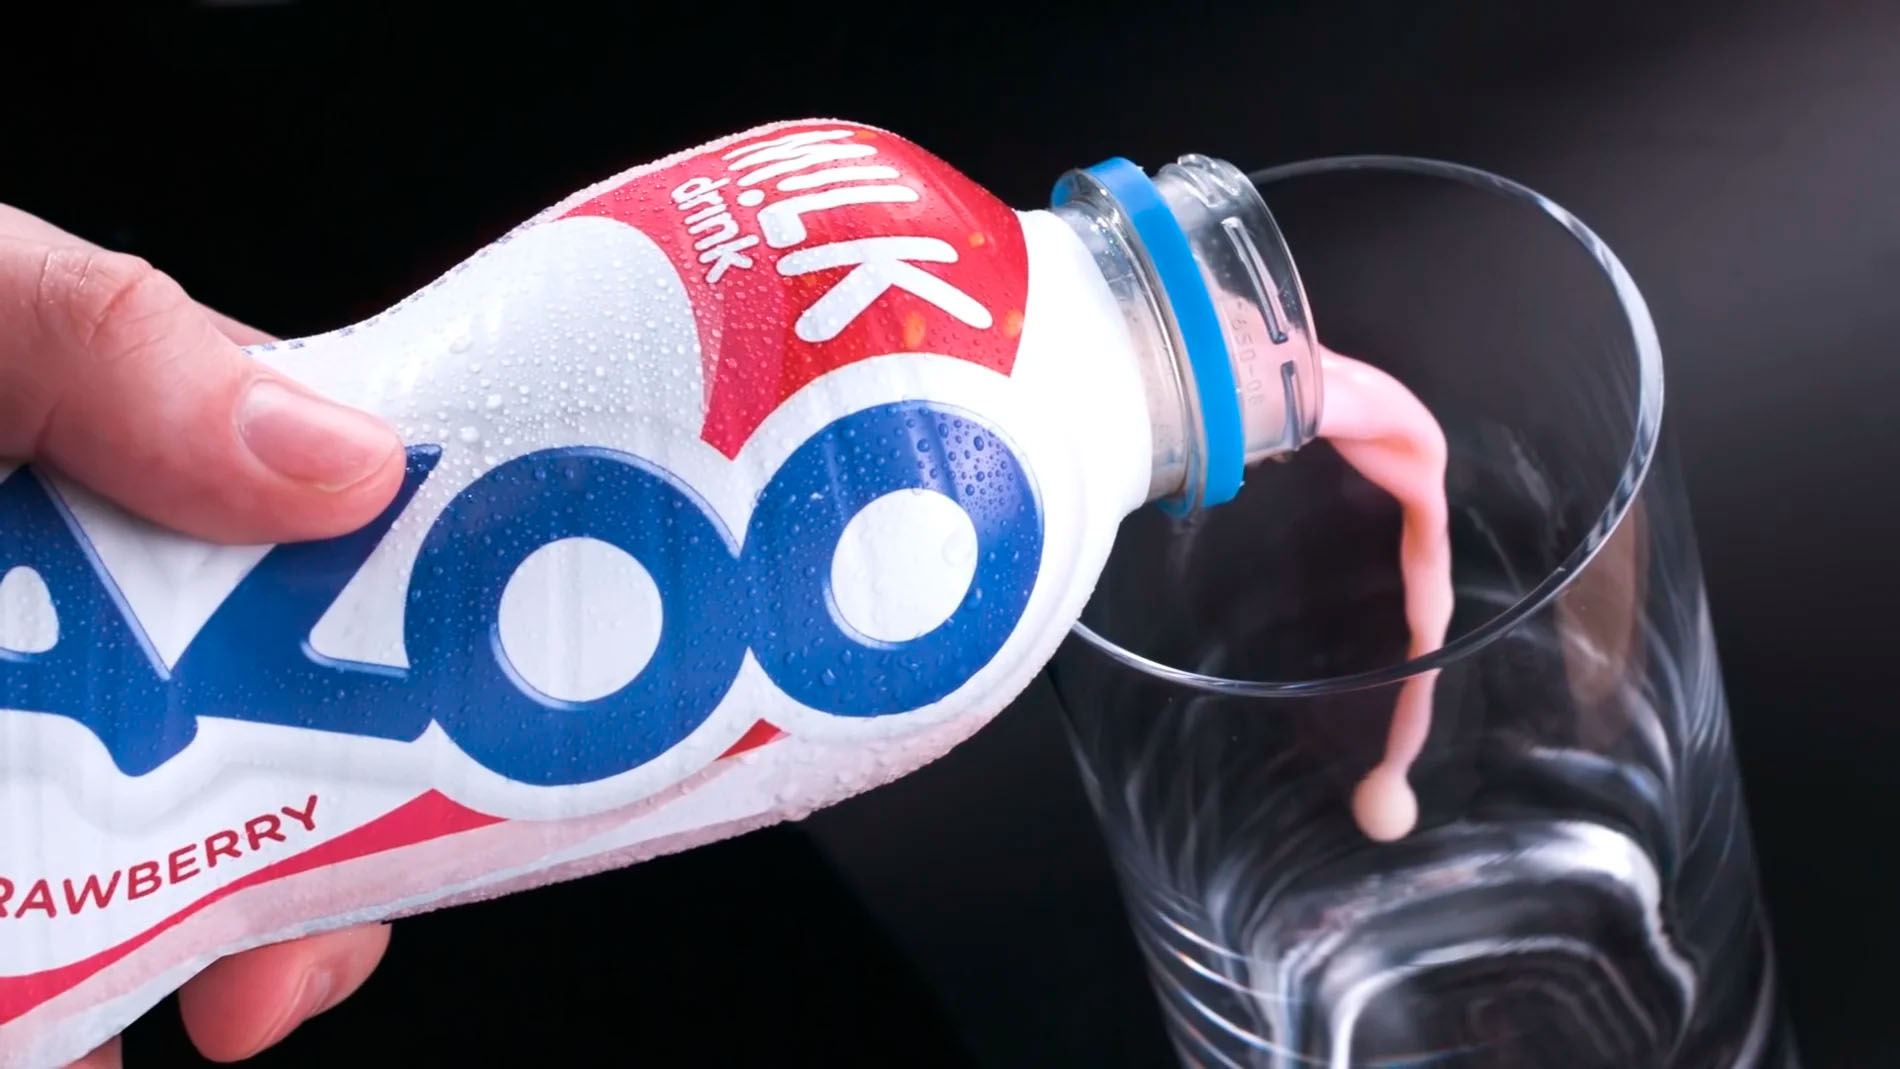 Advertising Liquids Film of Yazoo Strawberry